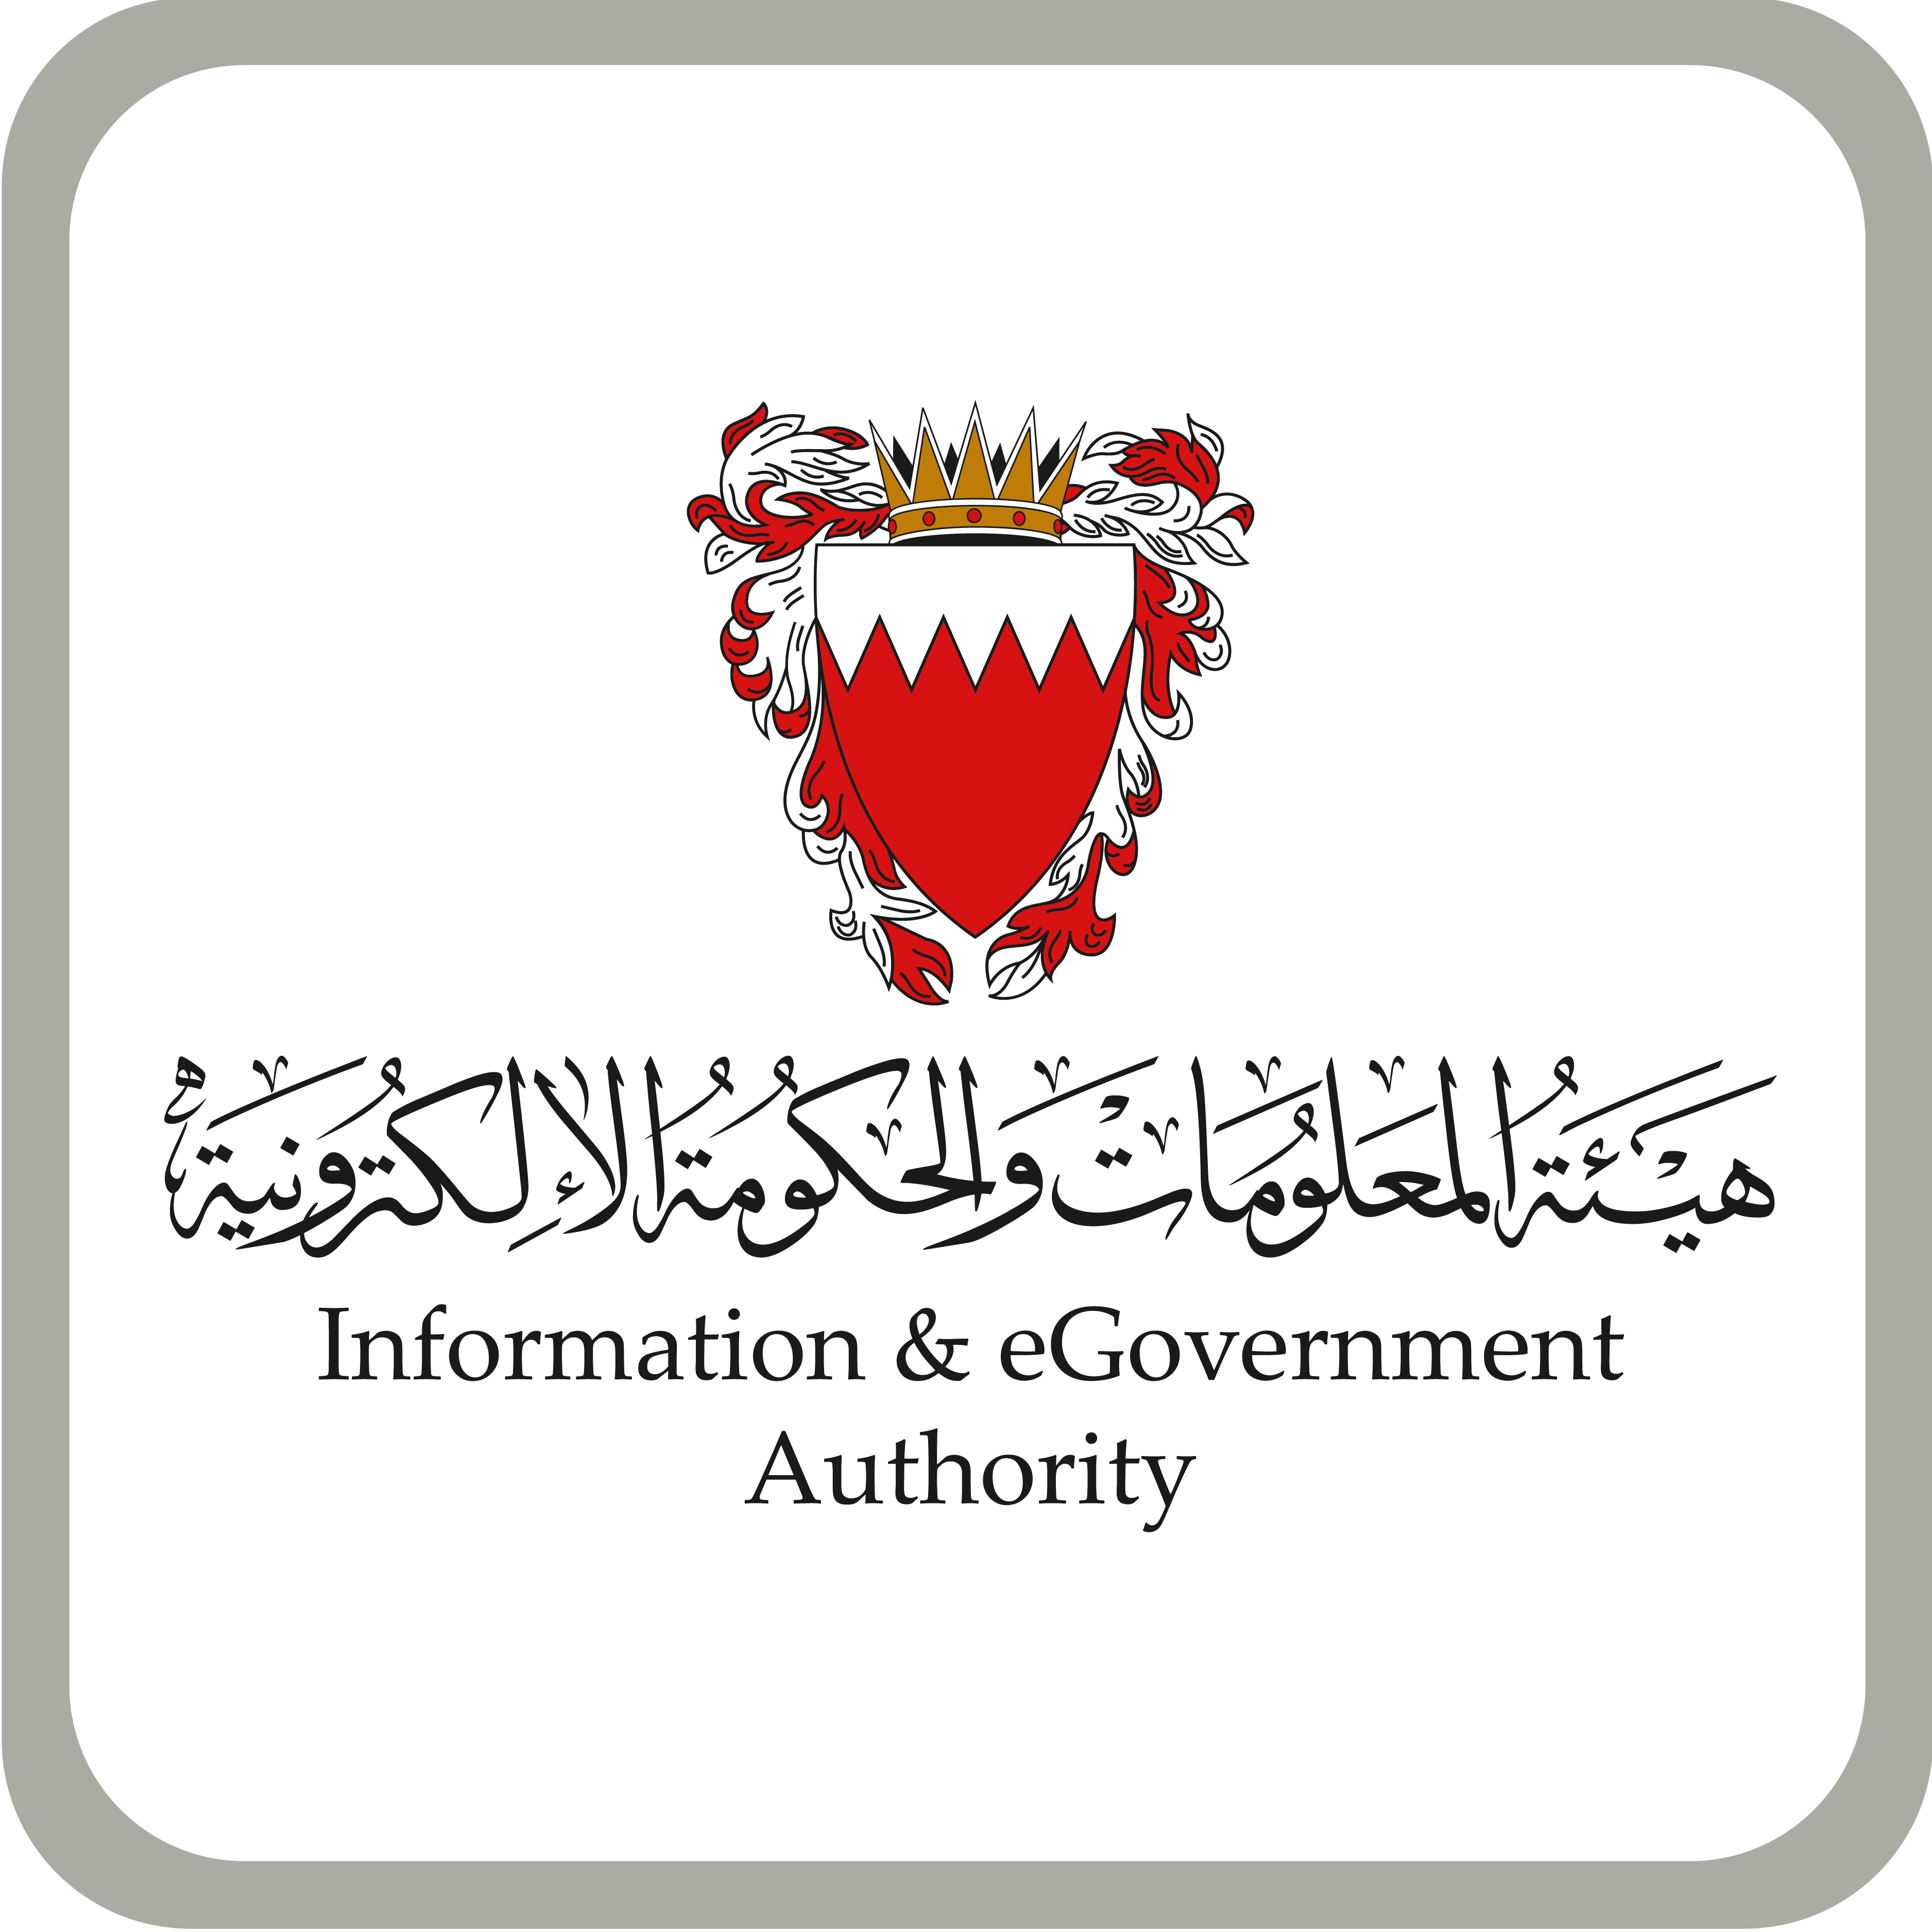 Information & eGoverment Authority